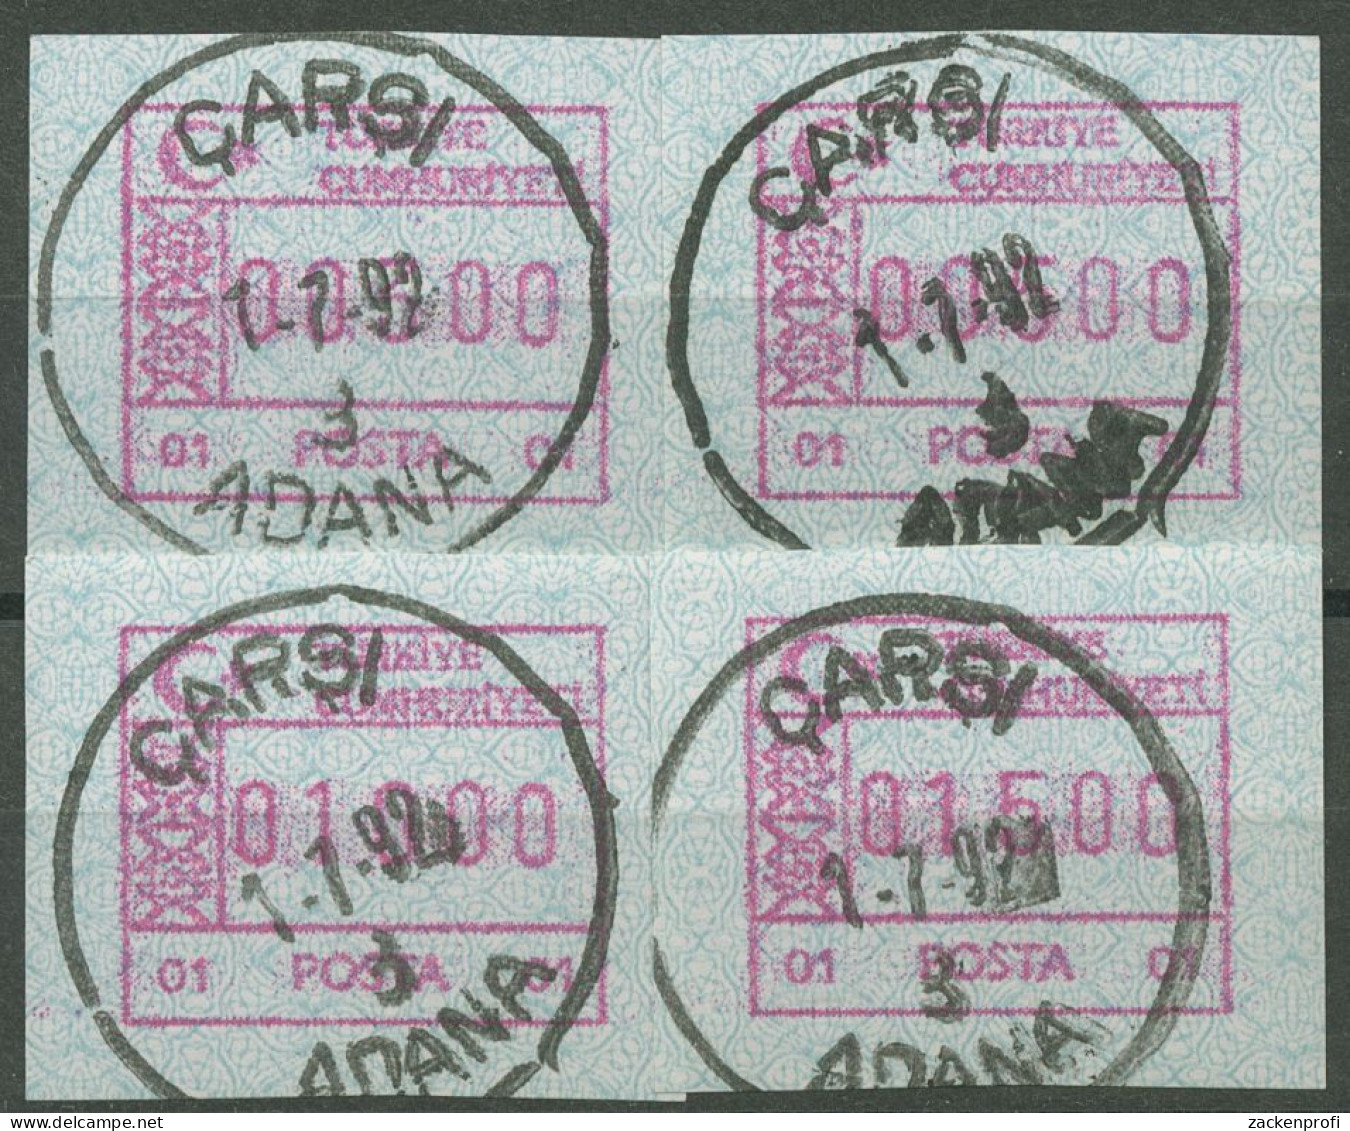 Türkei ATM 1992 Ornamente Automat 01 01, Satz 4 Werte ATM 2.1 S1 Gestempelt - Distributeurs